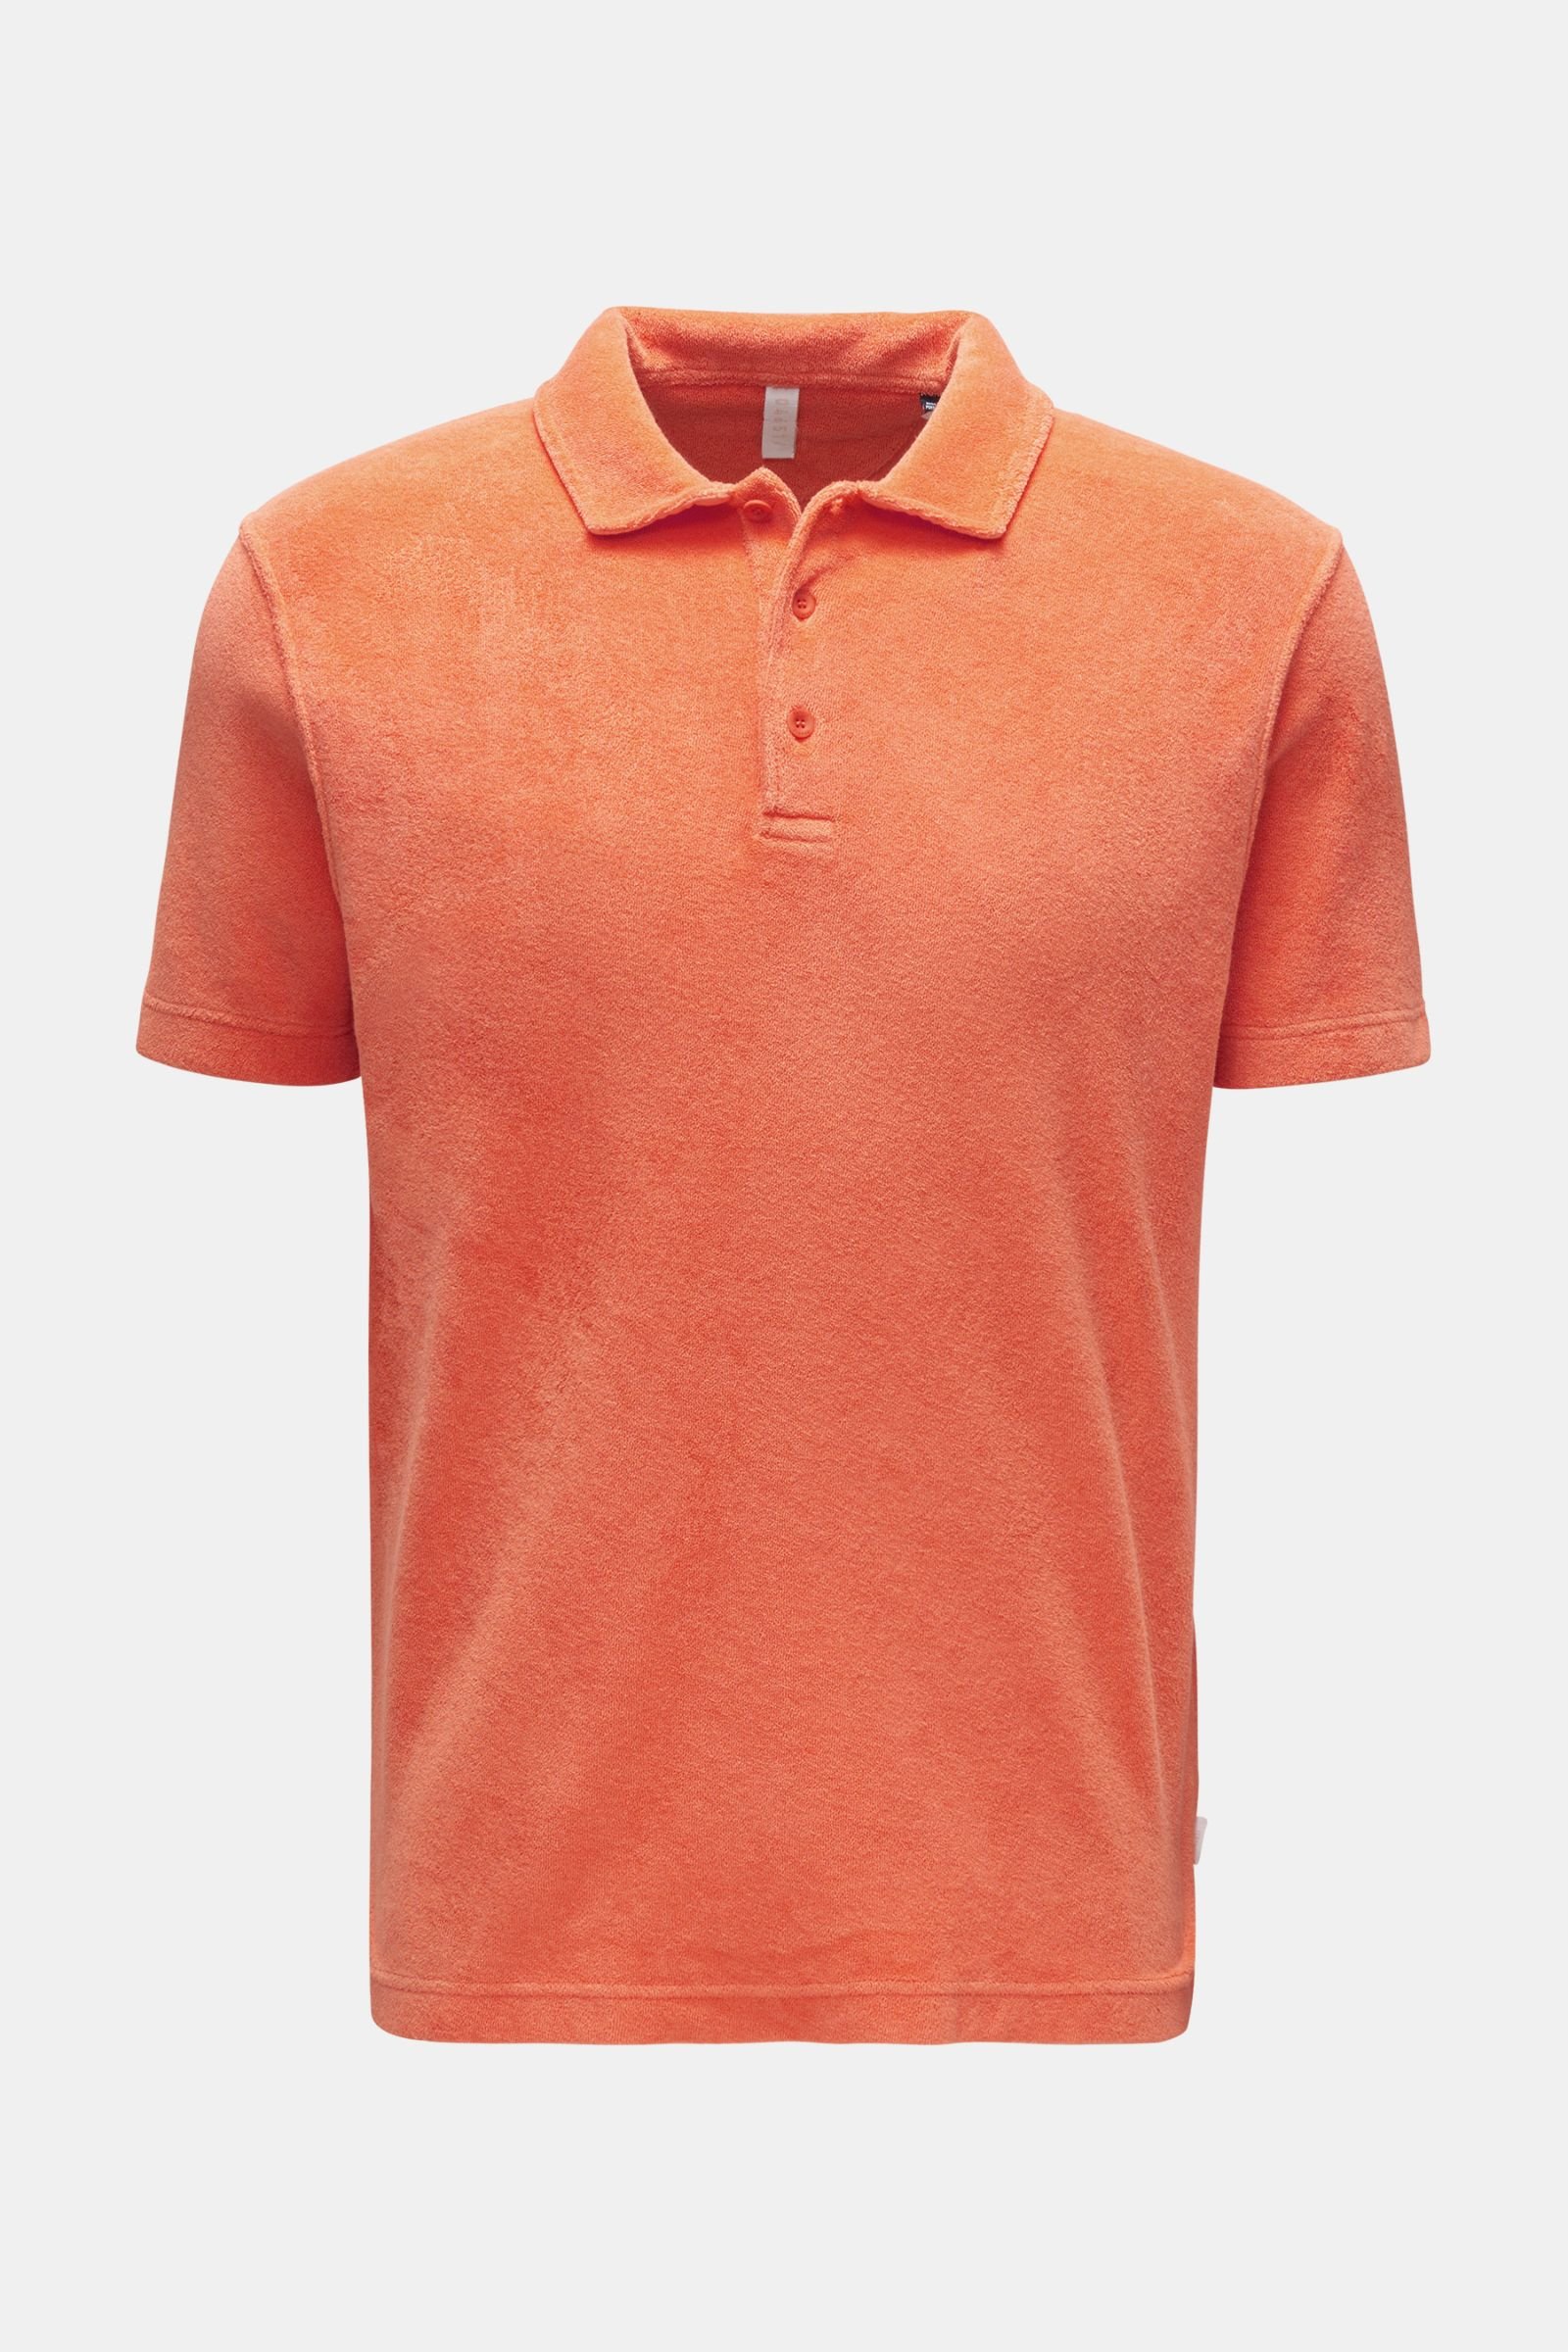 Terry polo shirt 'Terry Polo' orange 